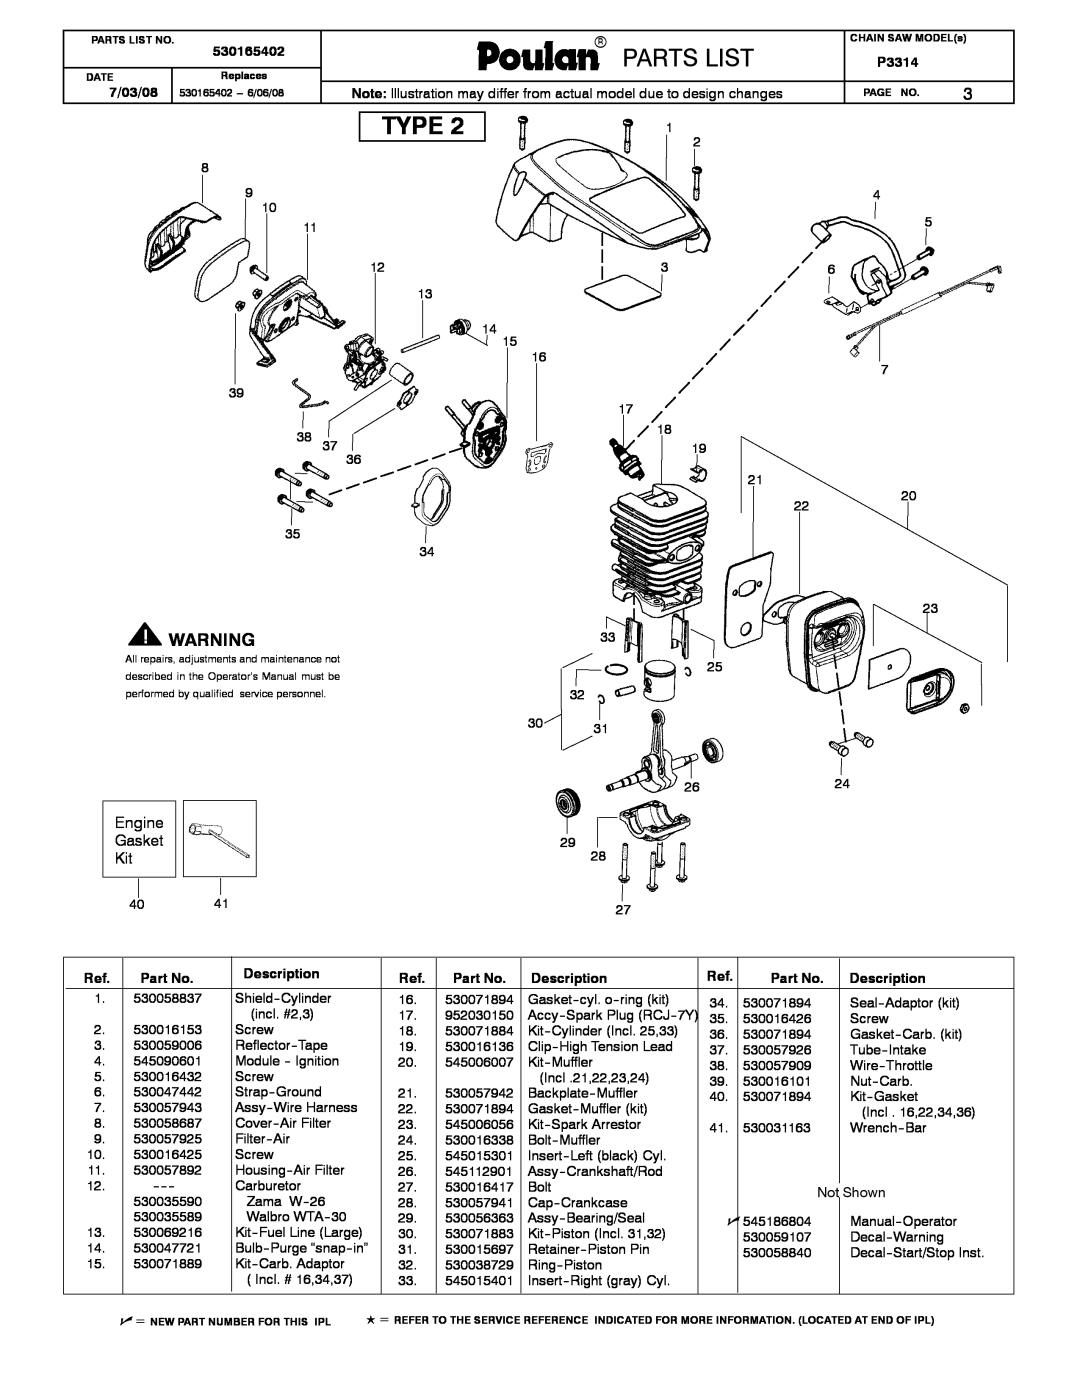 Poulan P3314 manual WEED EATERRr, Partslist, Type, Paramoupoulant, Engine Gasket Kit, 530165402, Description 